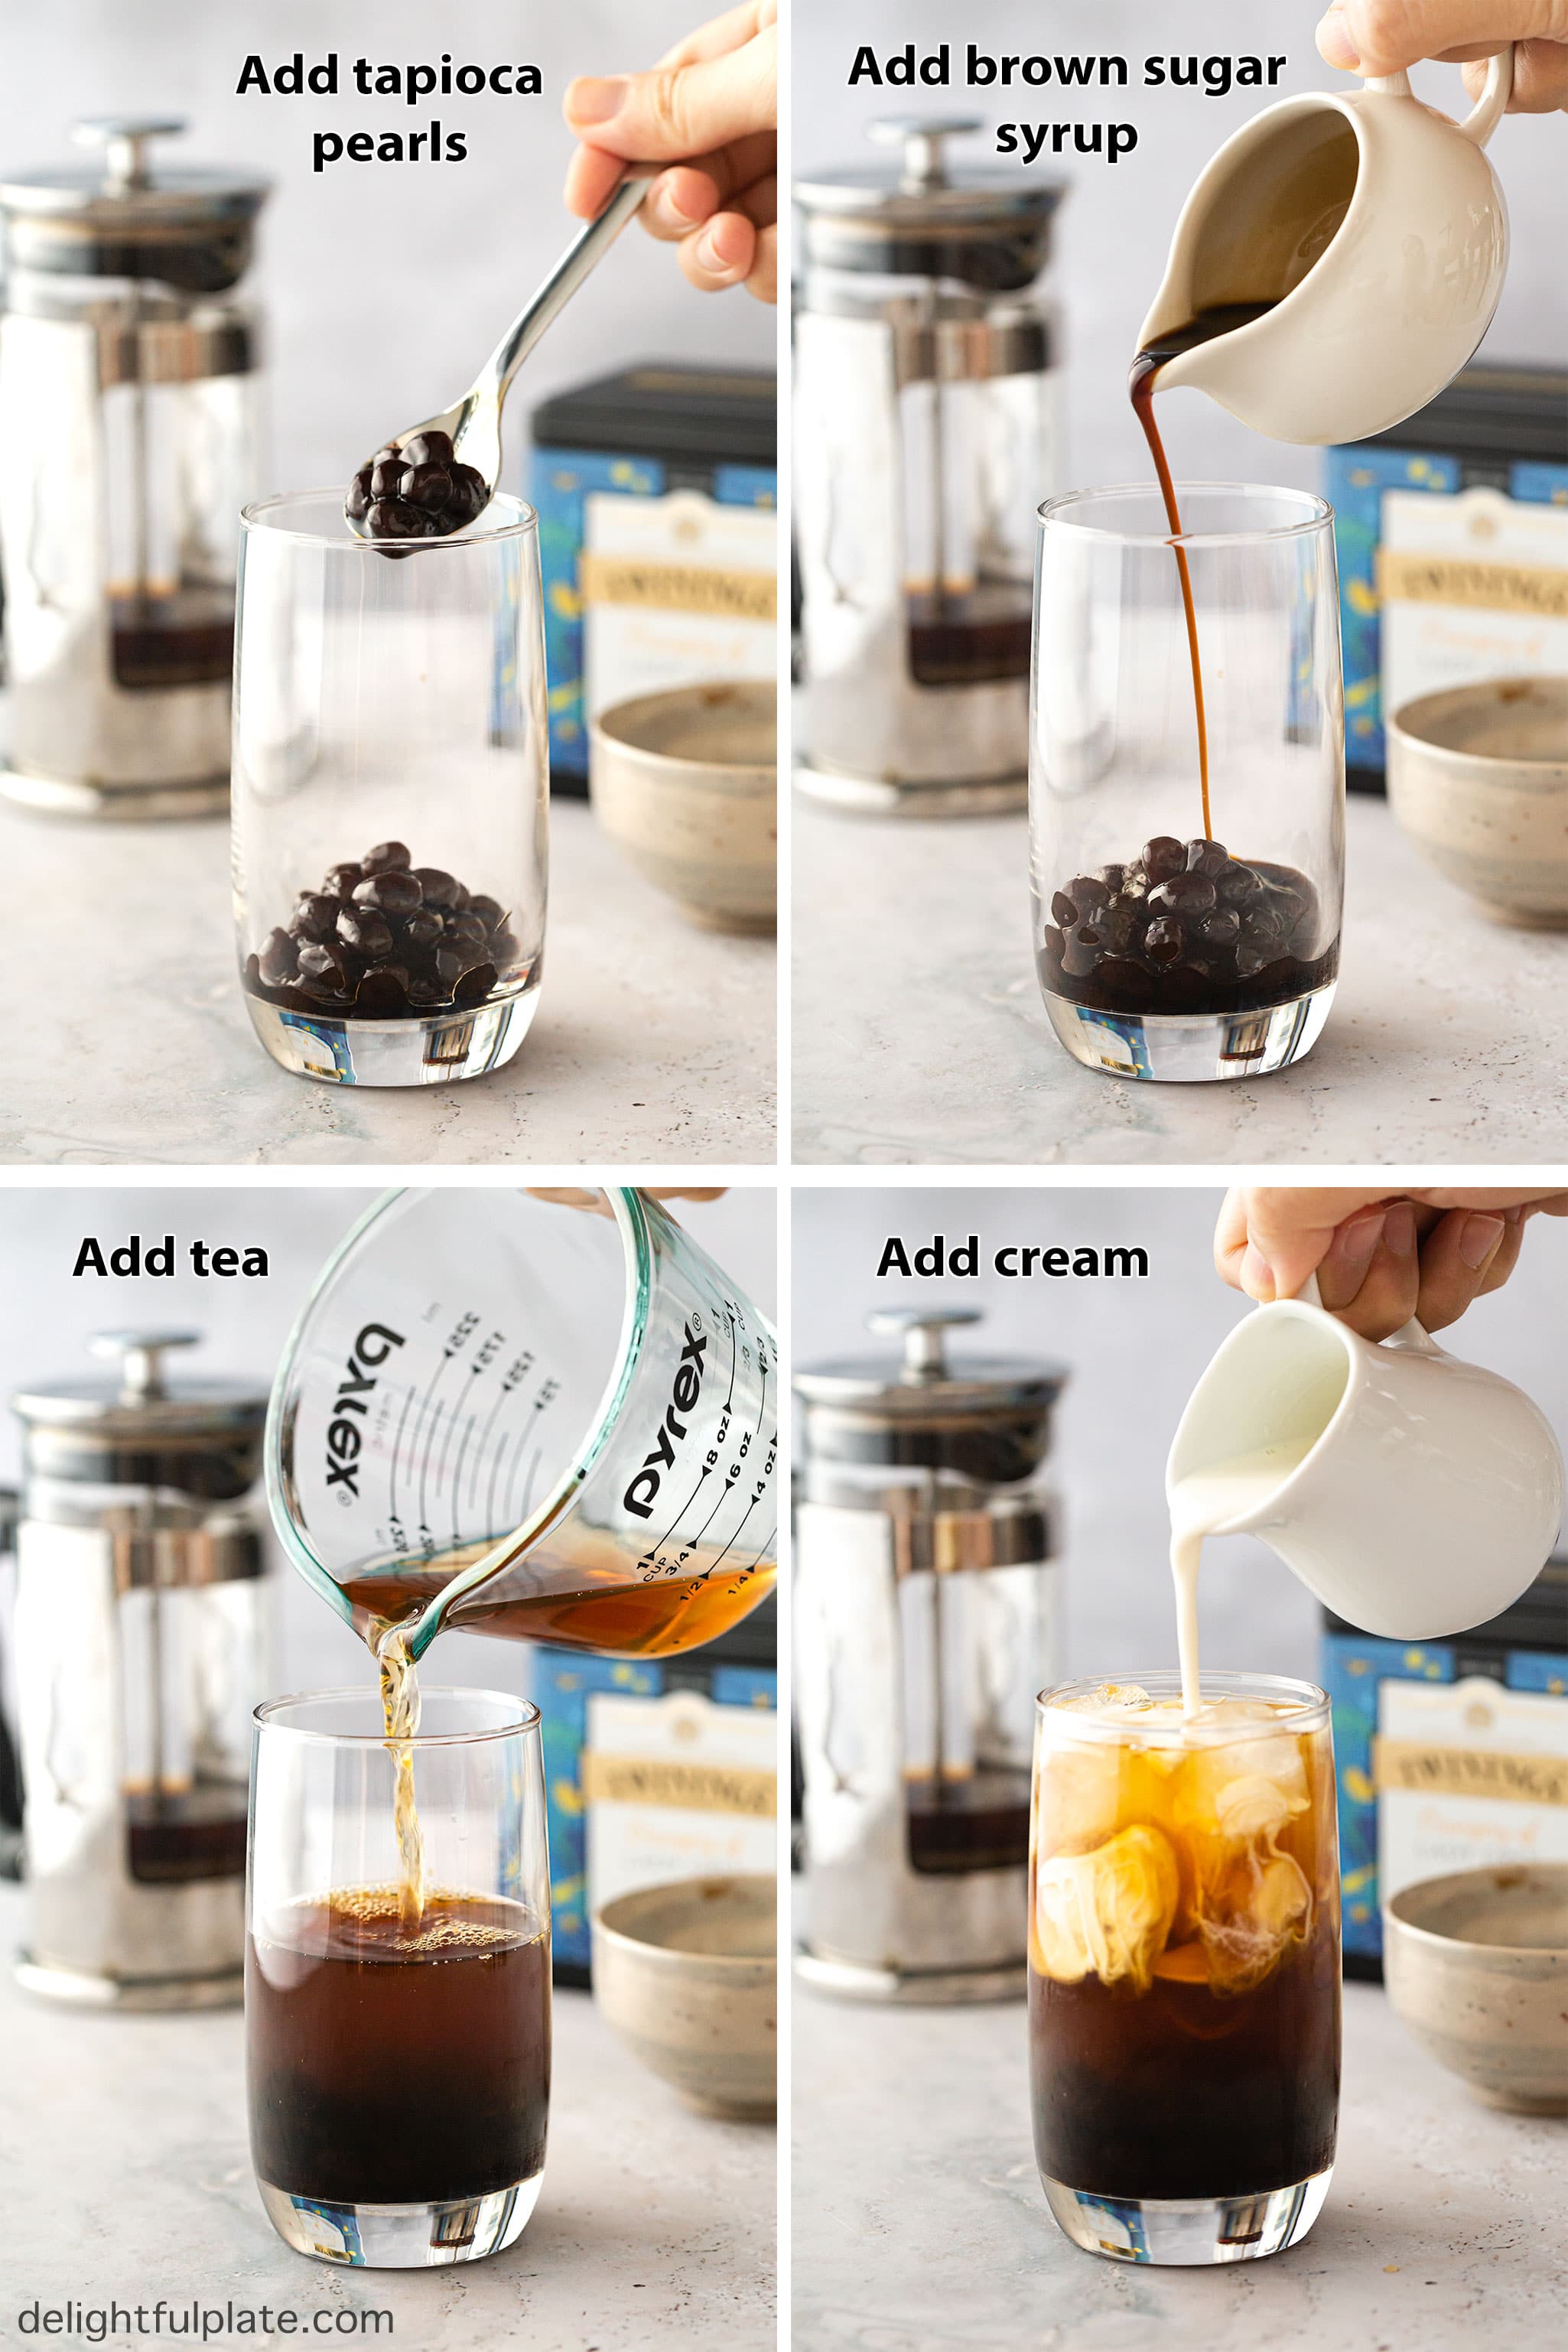 Step by step to make brown sugar milk tea at home: adding tapioca pearls, adding sugar syrup, adding tea and adding cream